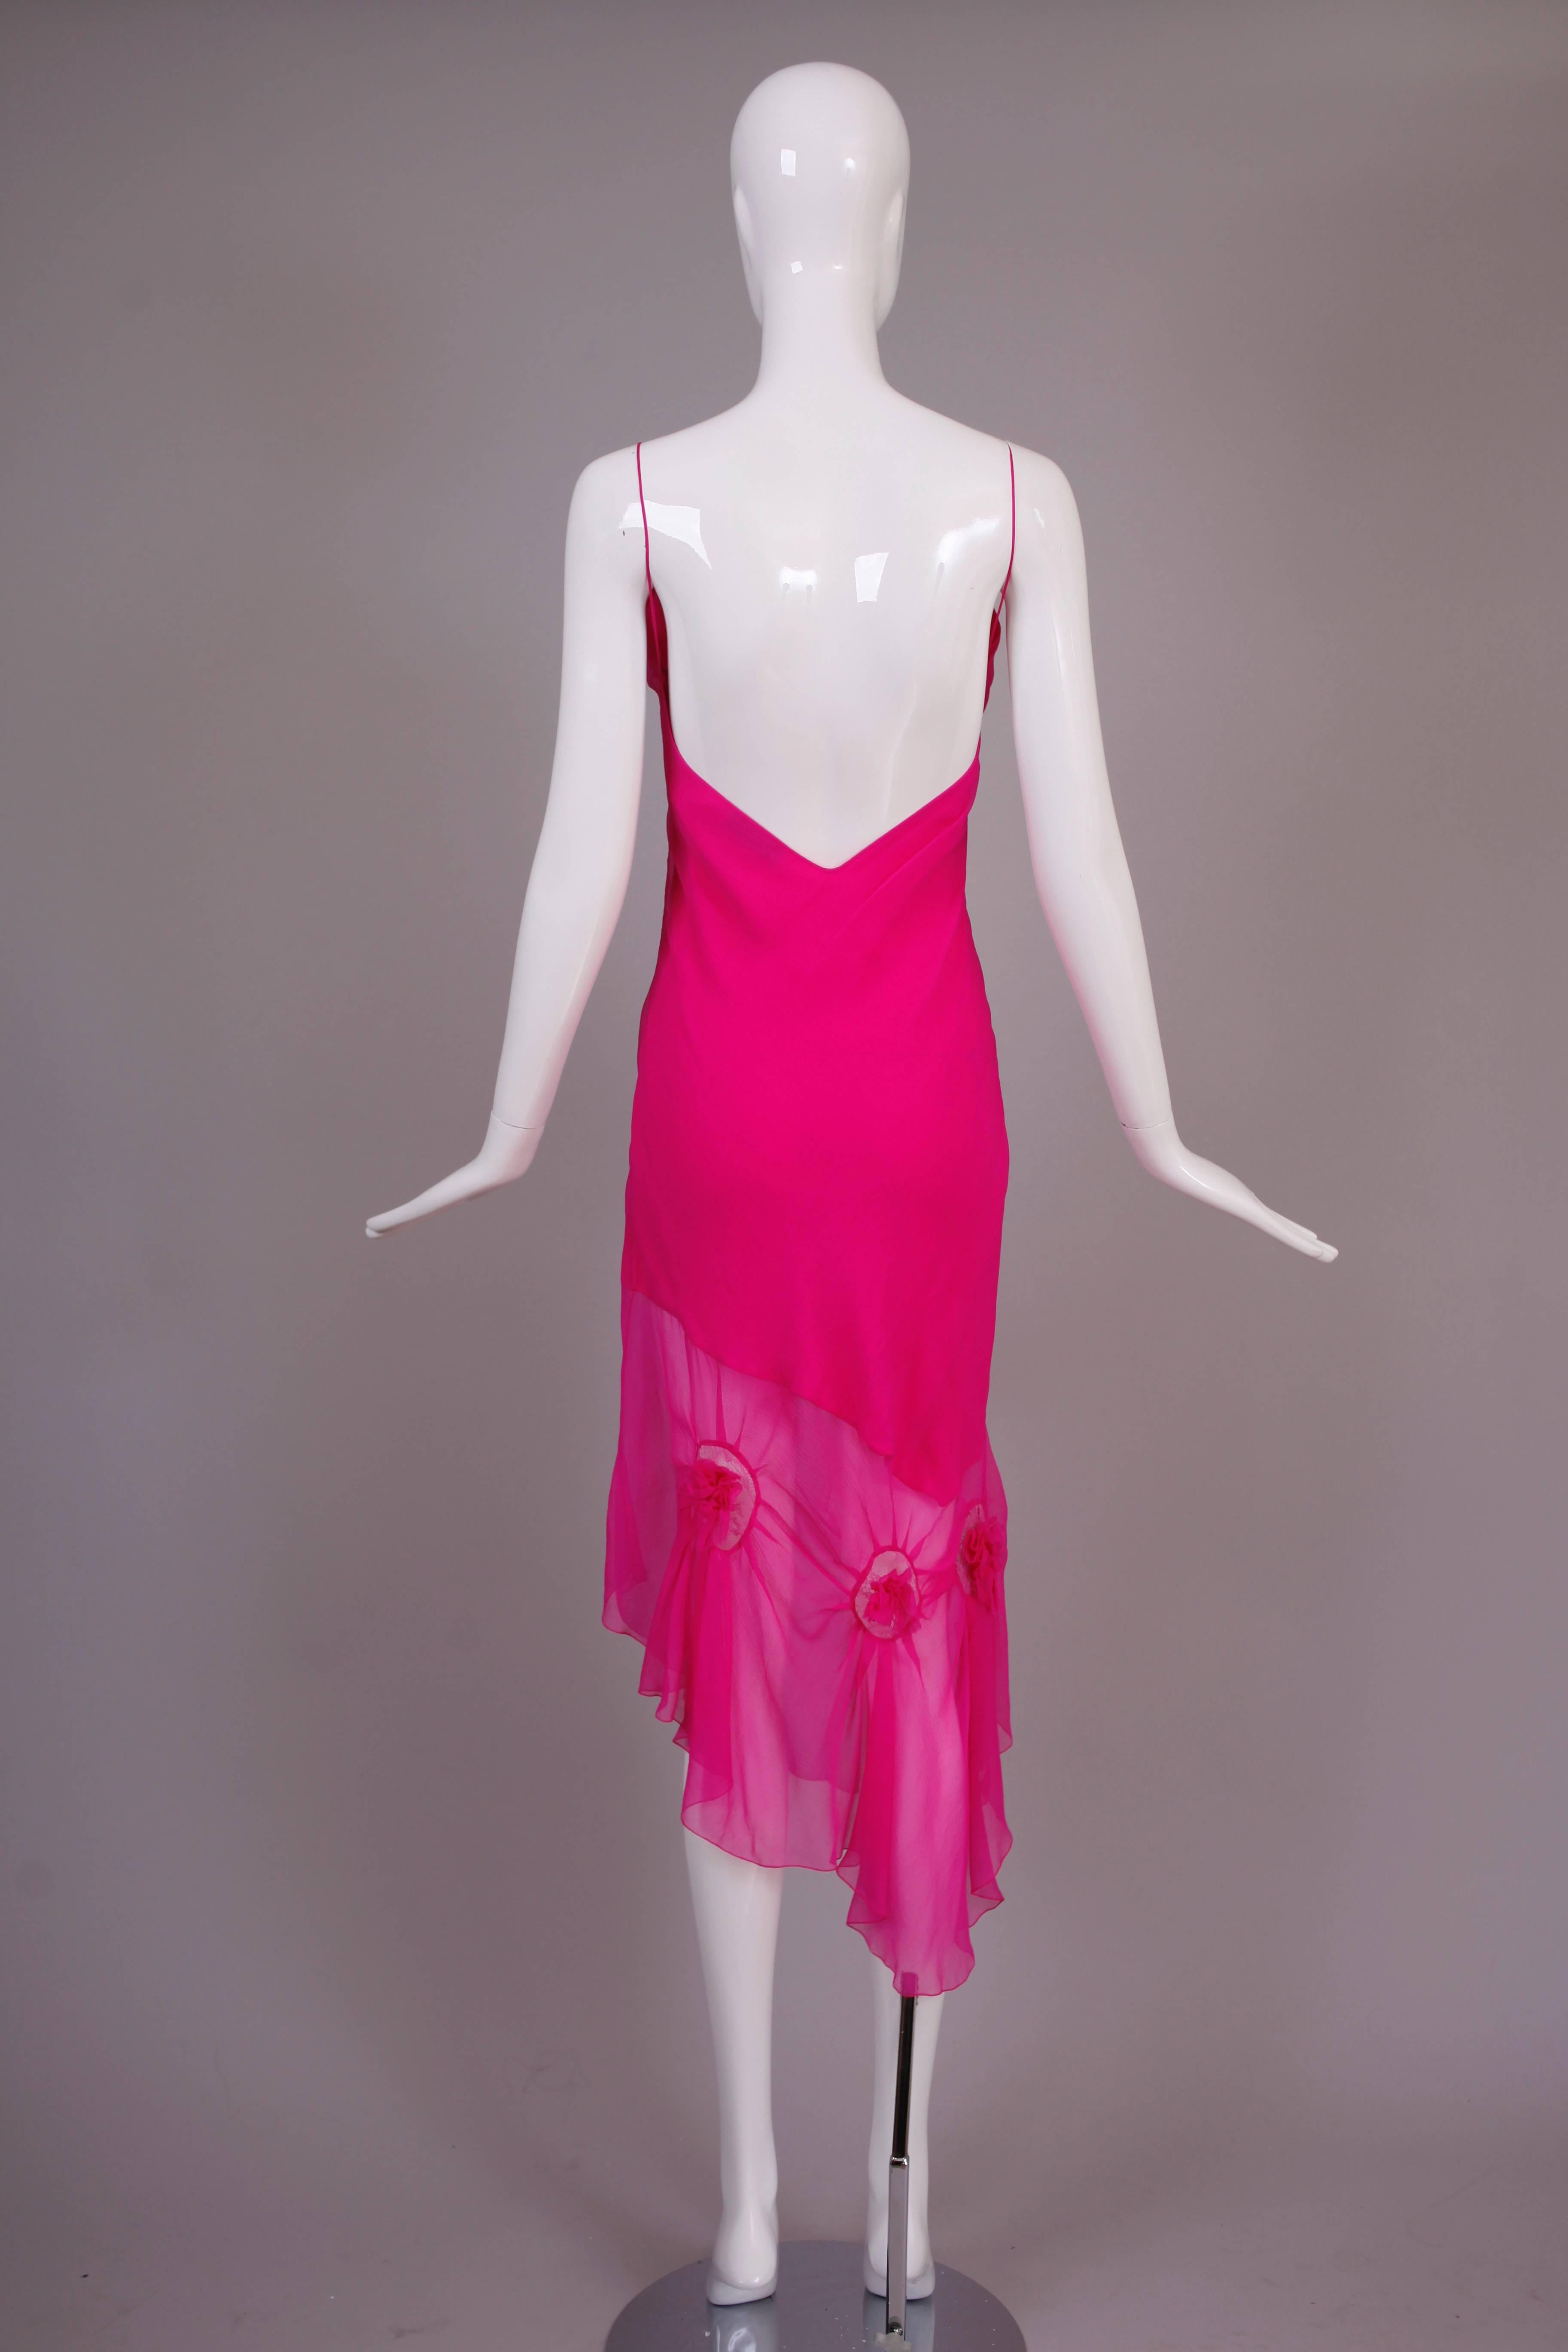 Women's John Galliano for Christian Dior Shocking Pink Silk Chiffon Dress Ca. 2000